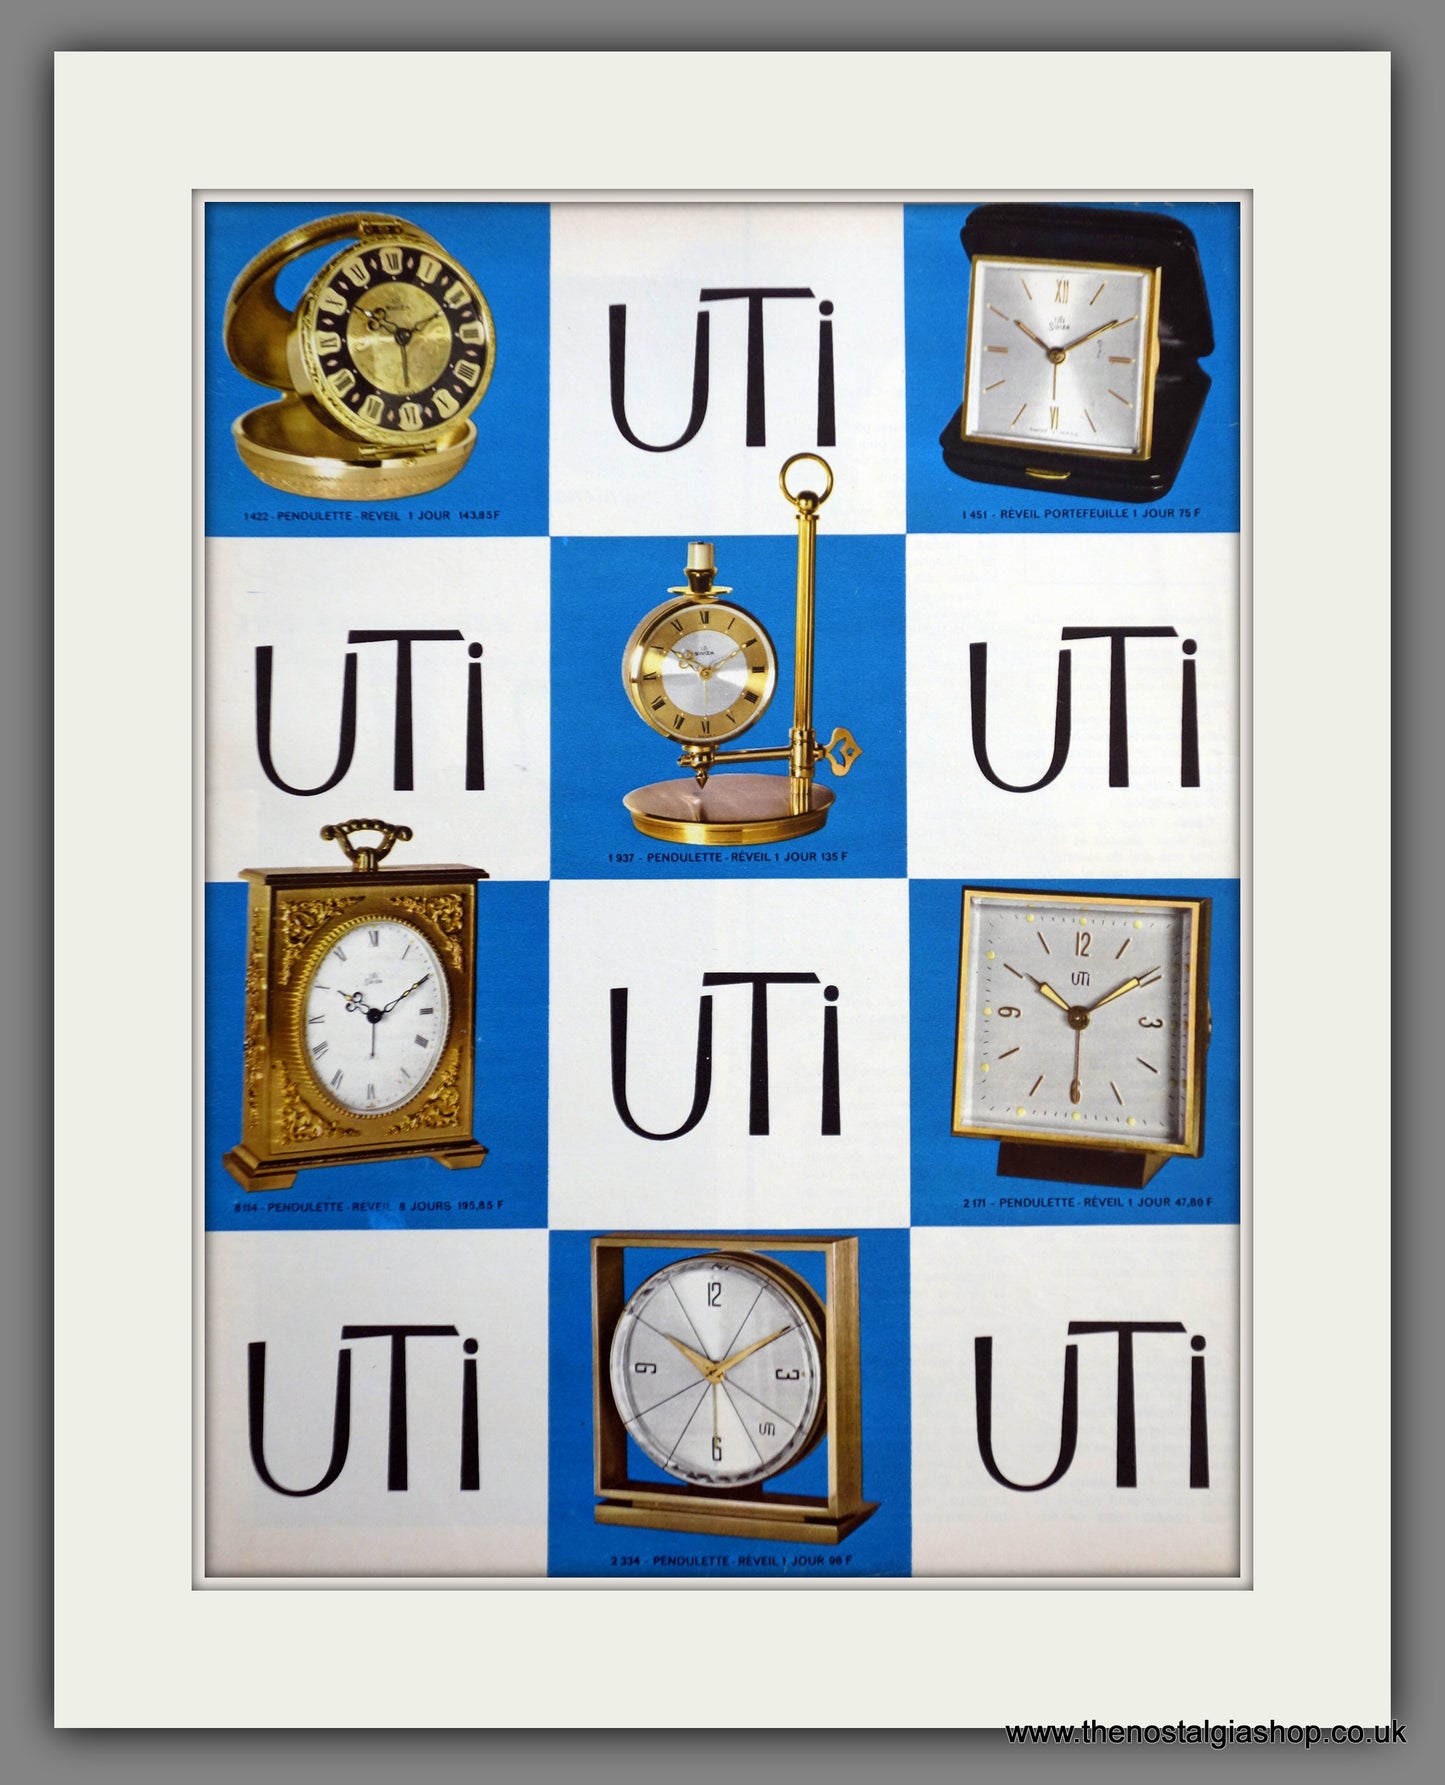 UTI Clocks. Original French Advert 1968 (ref AD301349)